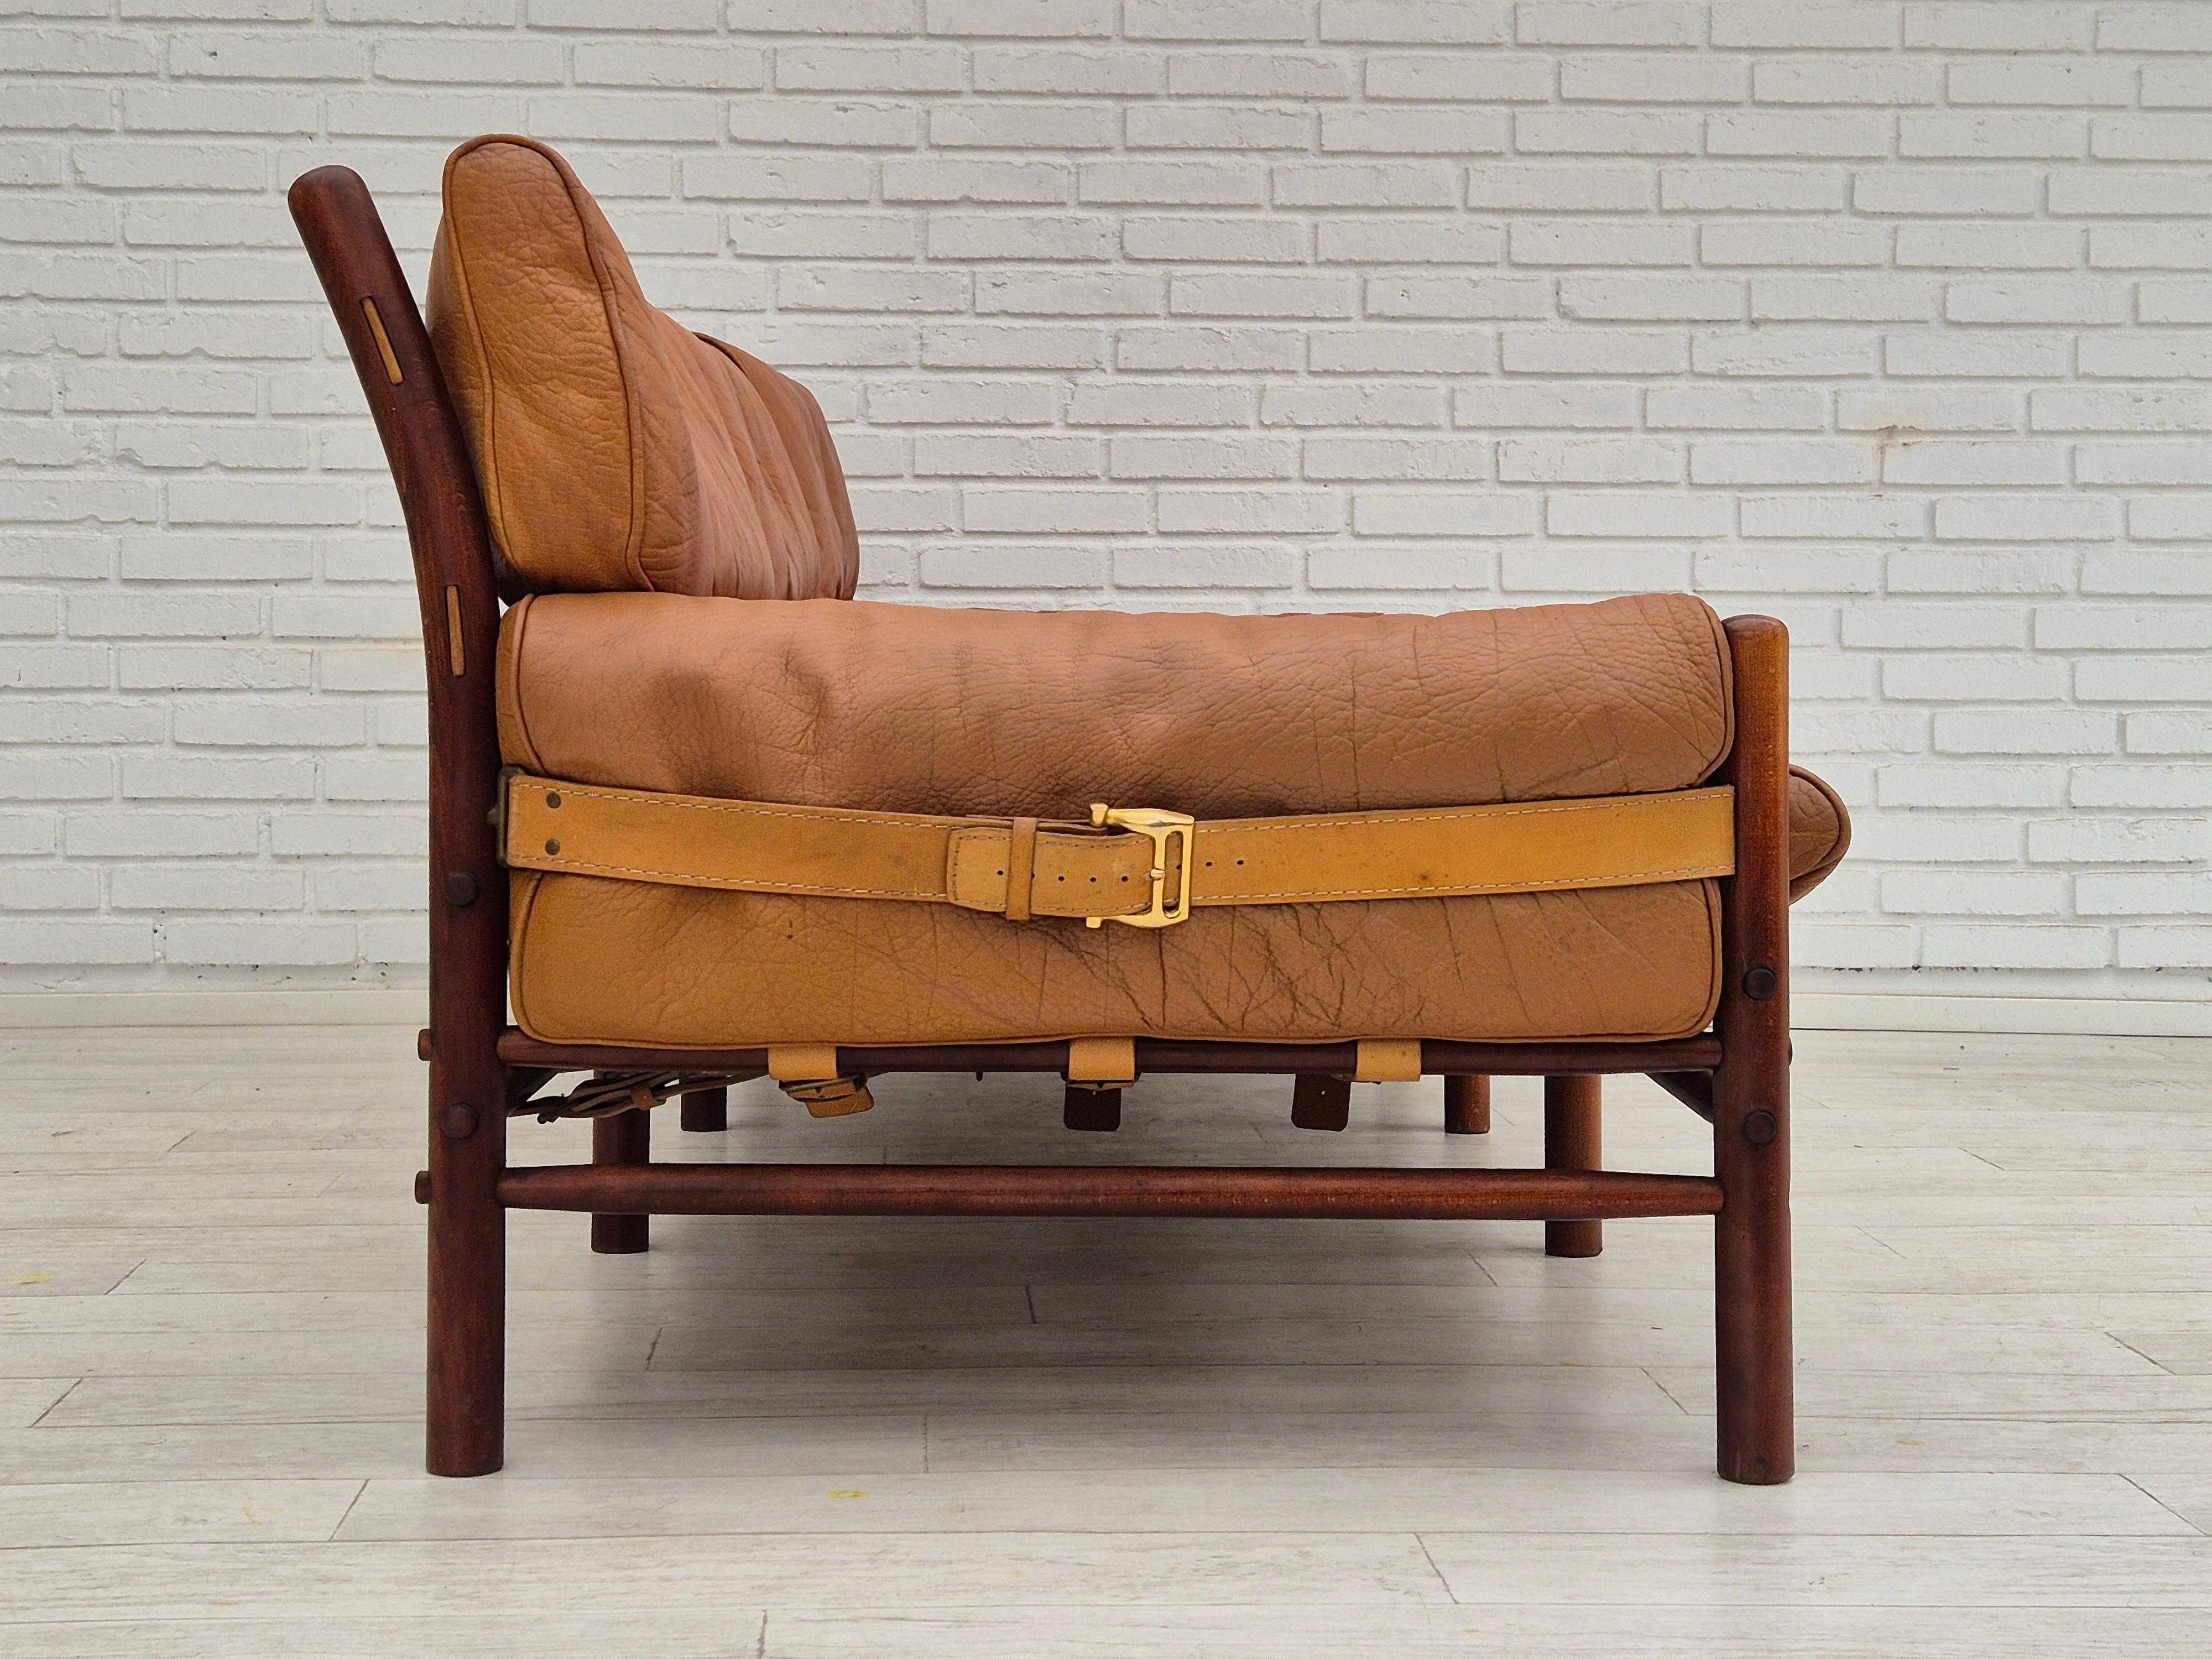 Swedish 1960s, Scandinavian design by Arne Norell, sofa, model 